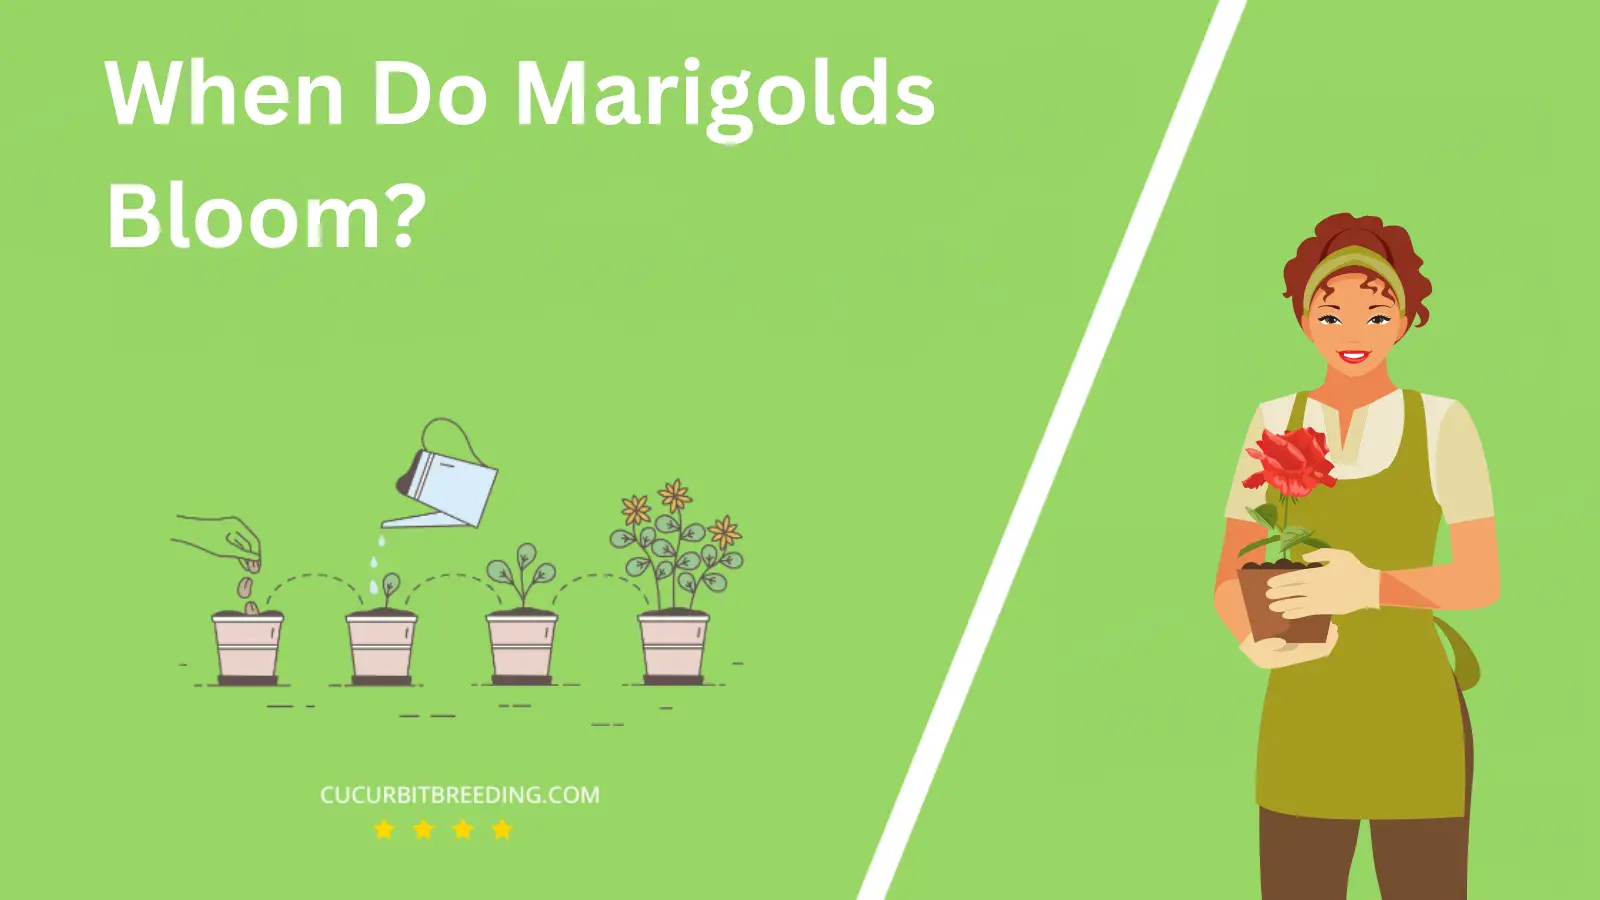 When Do Marigolds Bloom?